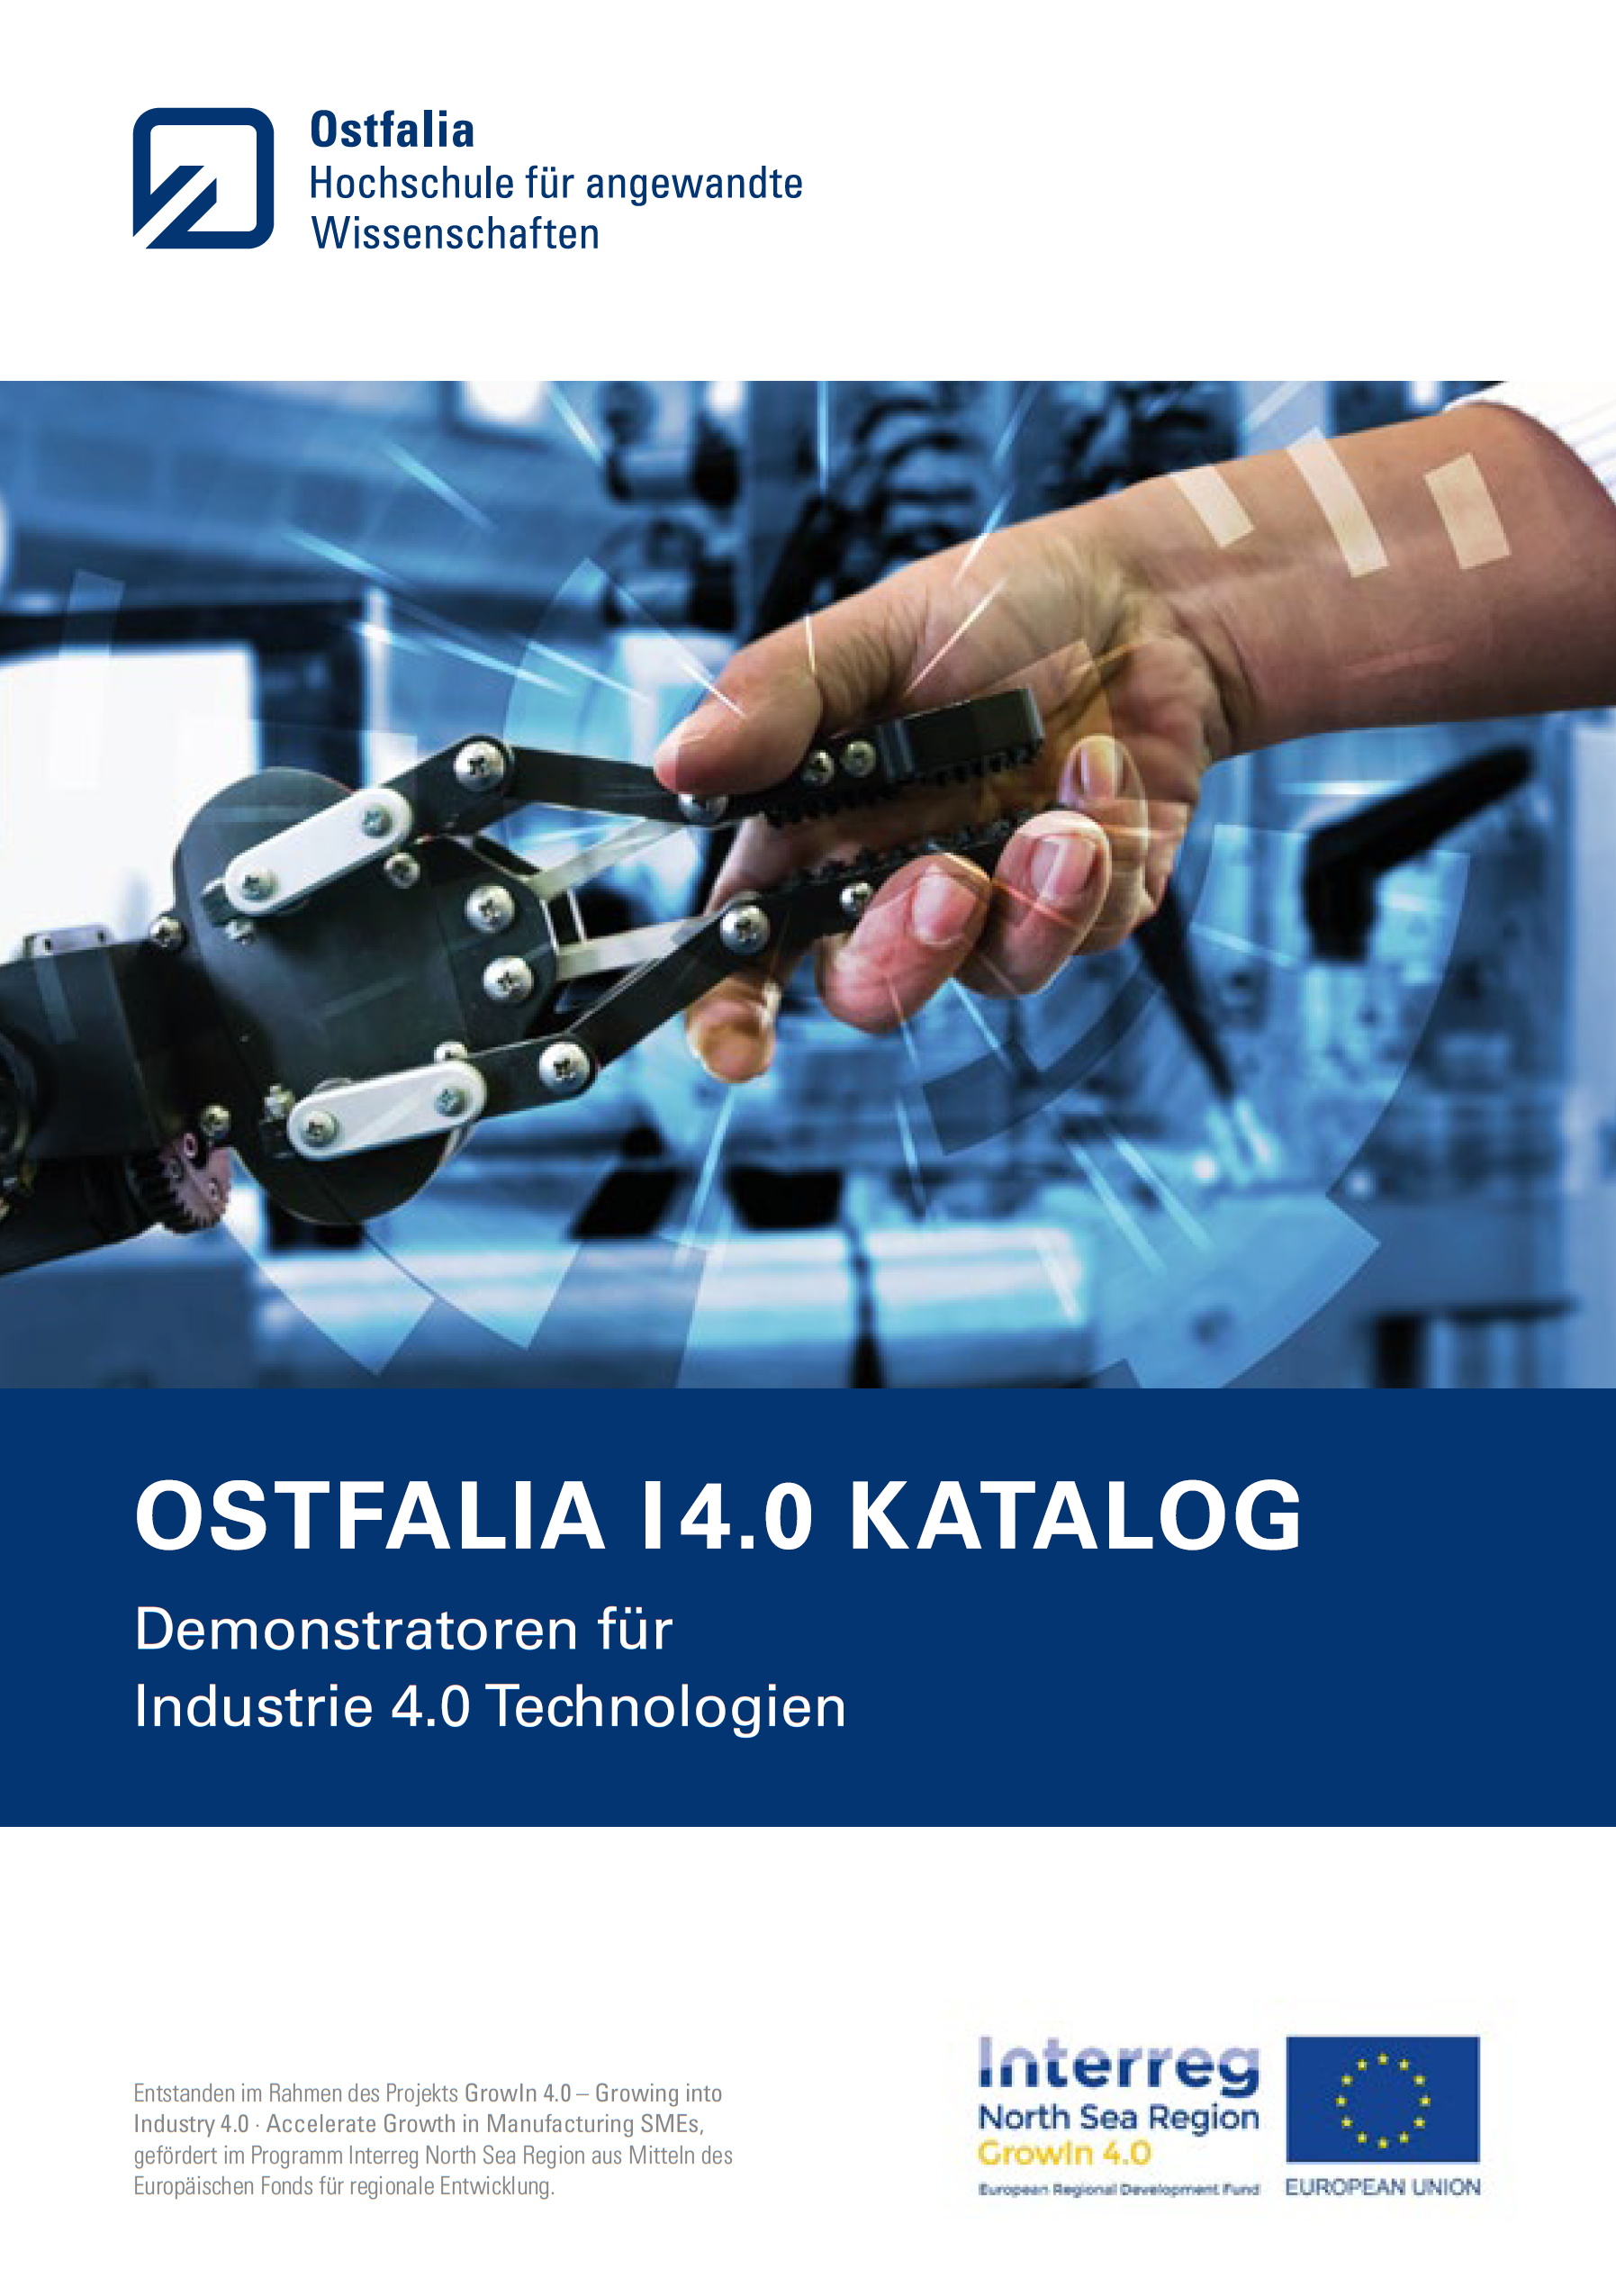 Ostfalia I4.0 Katalog - Demonstratoren für Industrie 4.0 Technologien